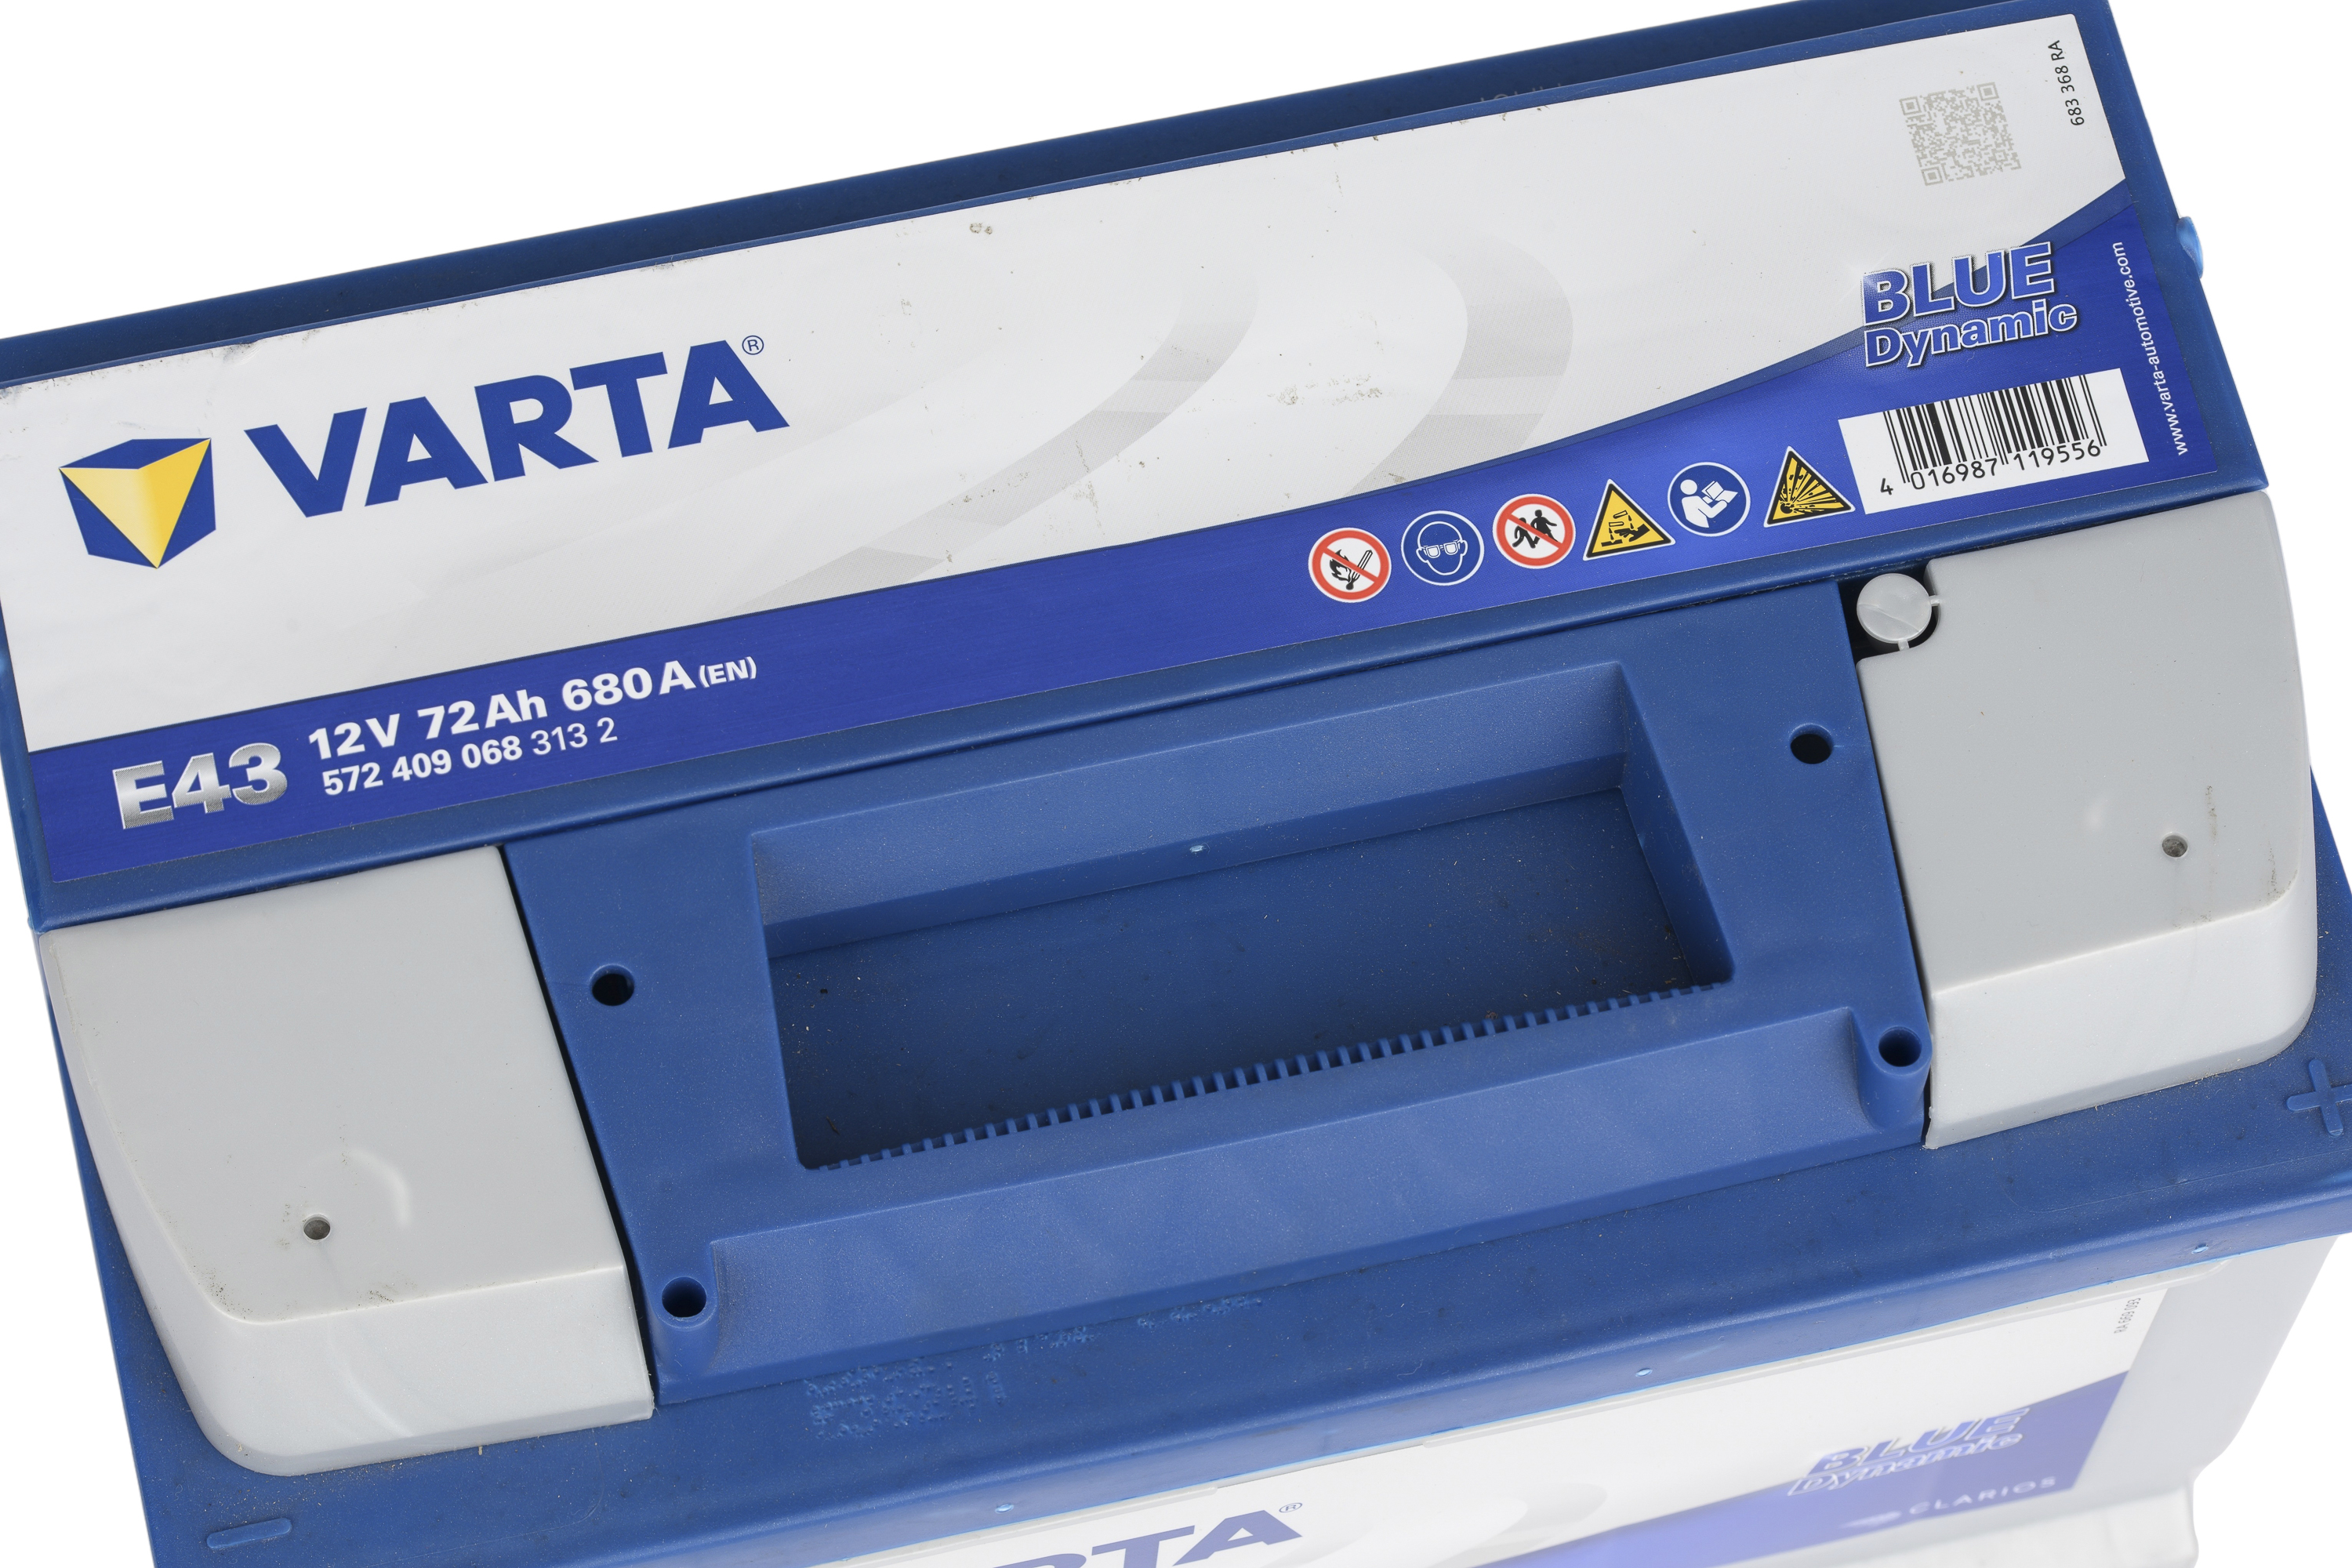 VARTA Batería Blue Dynamic E43 - 12V/72AH - 572.409.068 